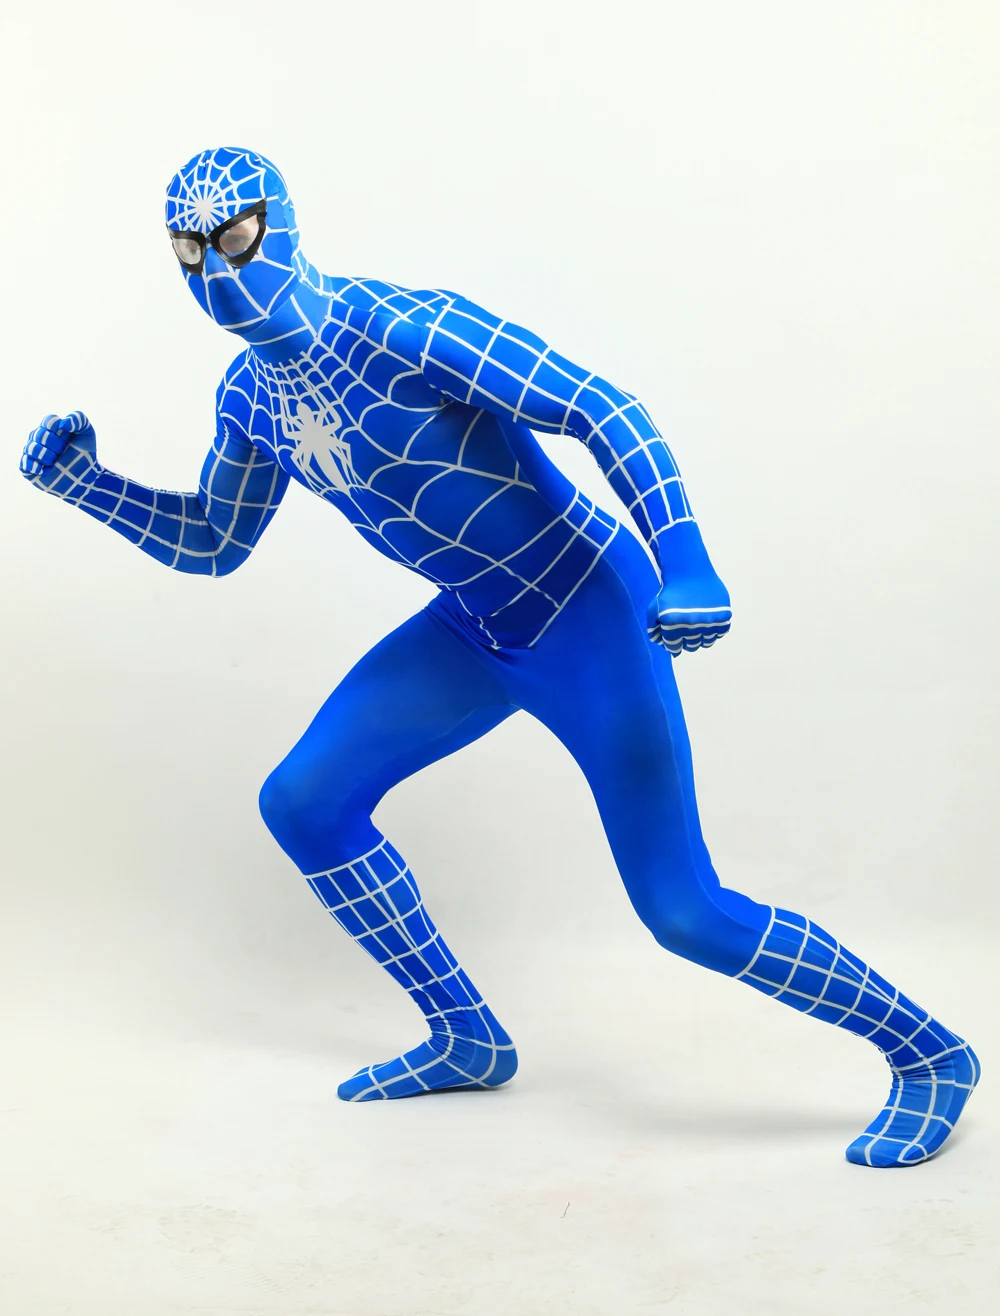 Хэллоуин костюм Человек-паук из лайкры костюмы, костюмы zentai